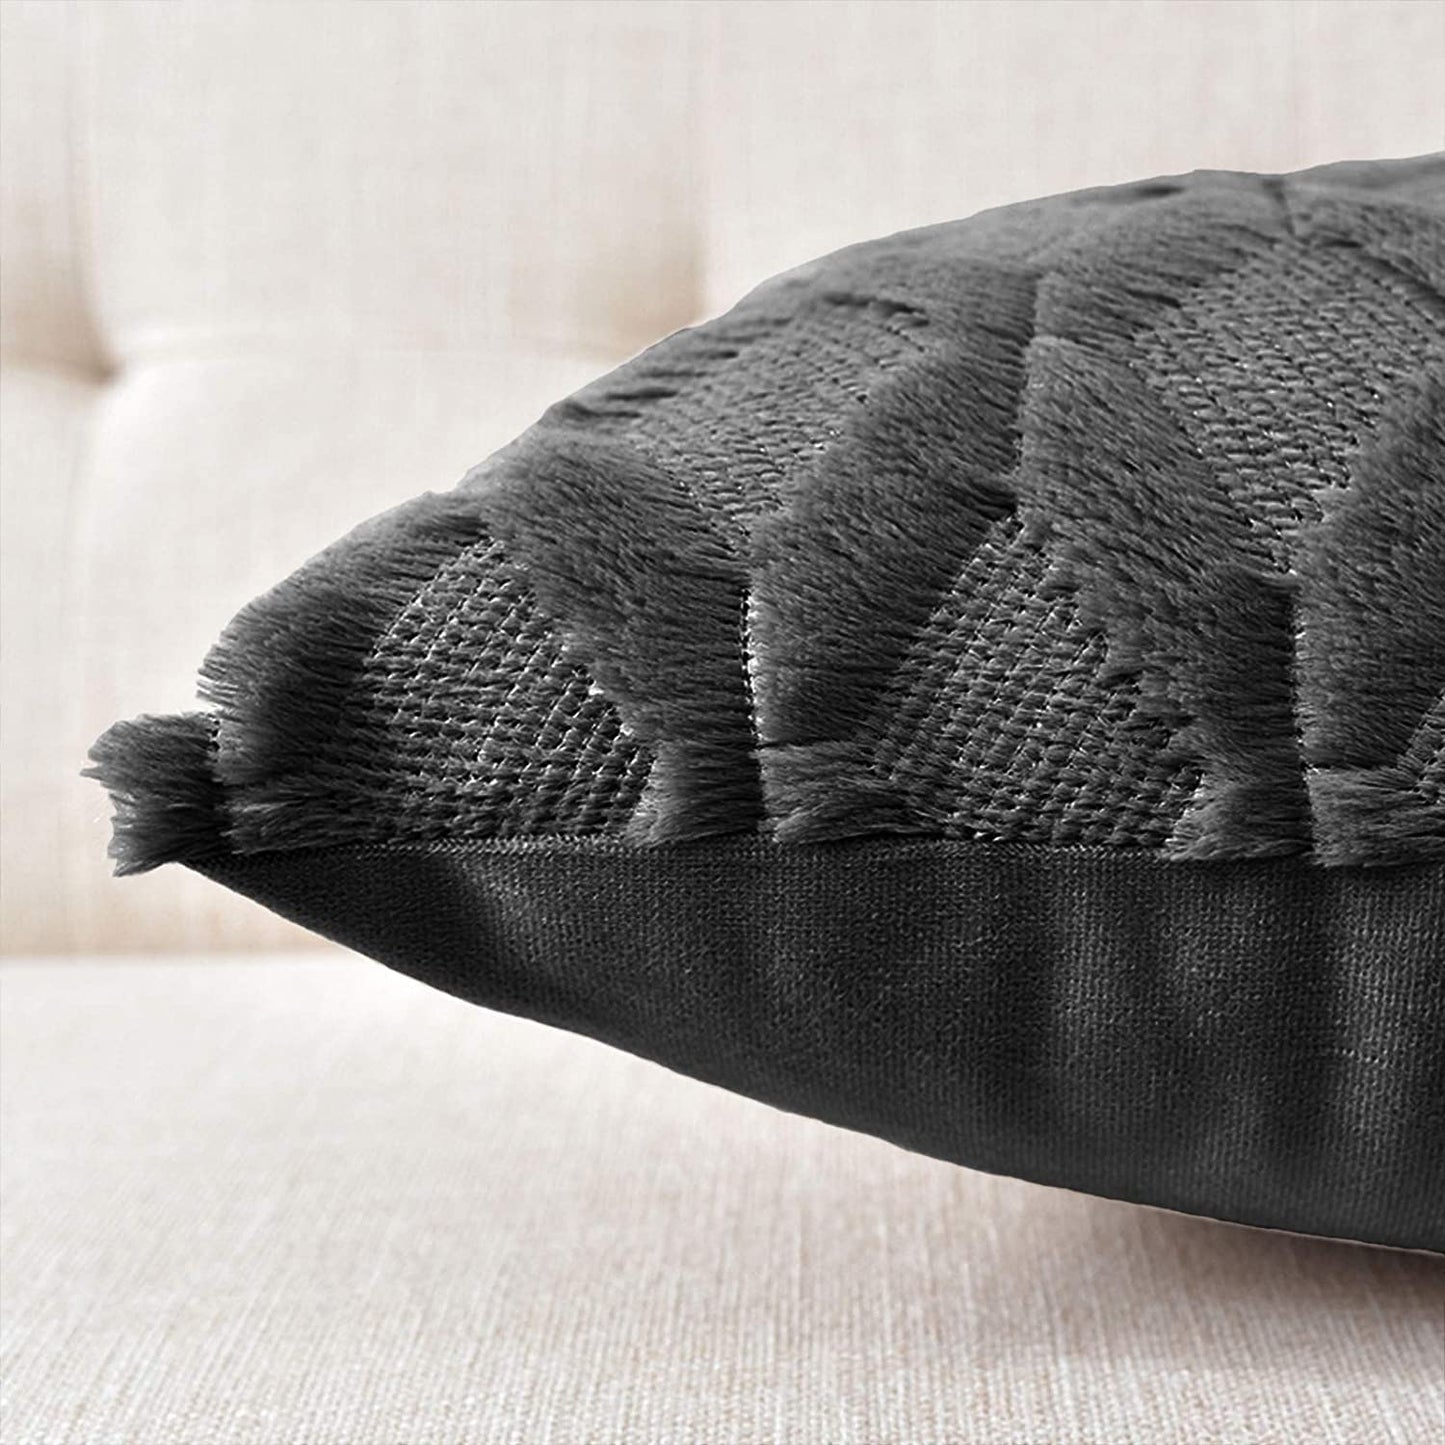 Decorative Boho Throw Pillow Covers 45 x 45 cm - 2 Pack Black